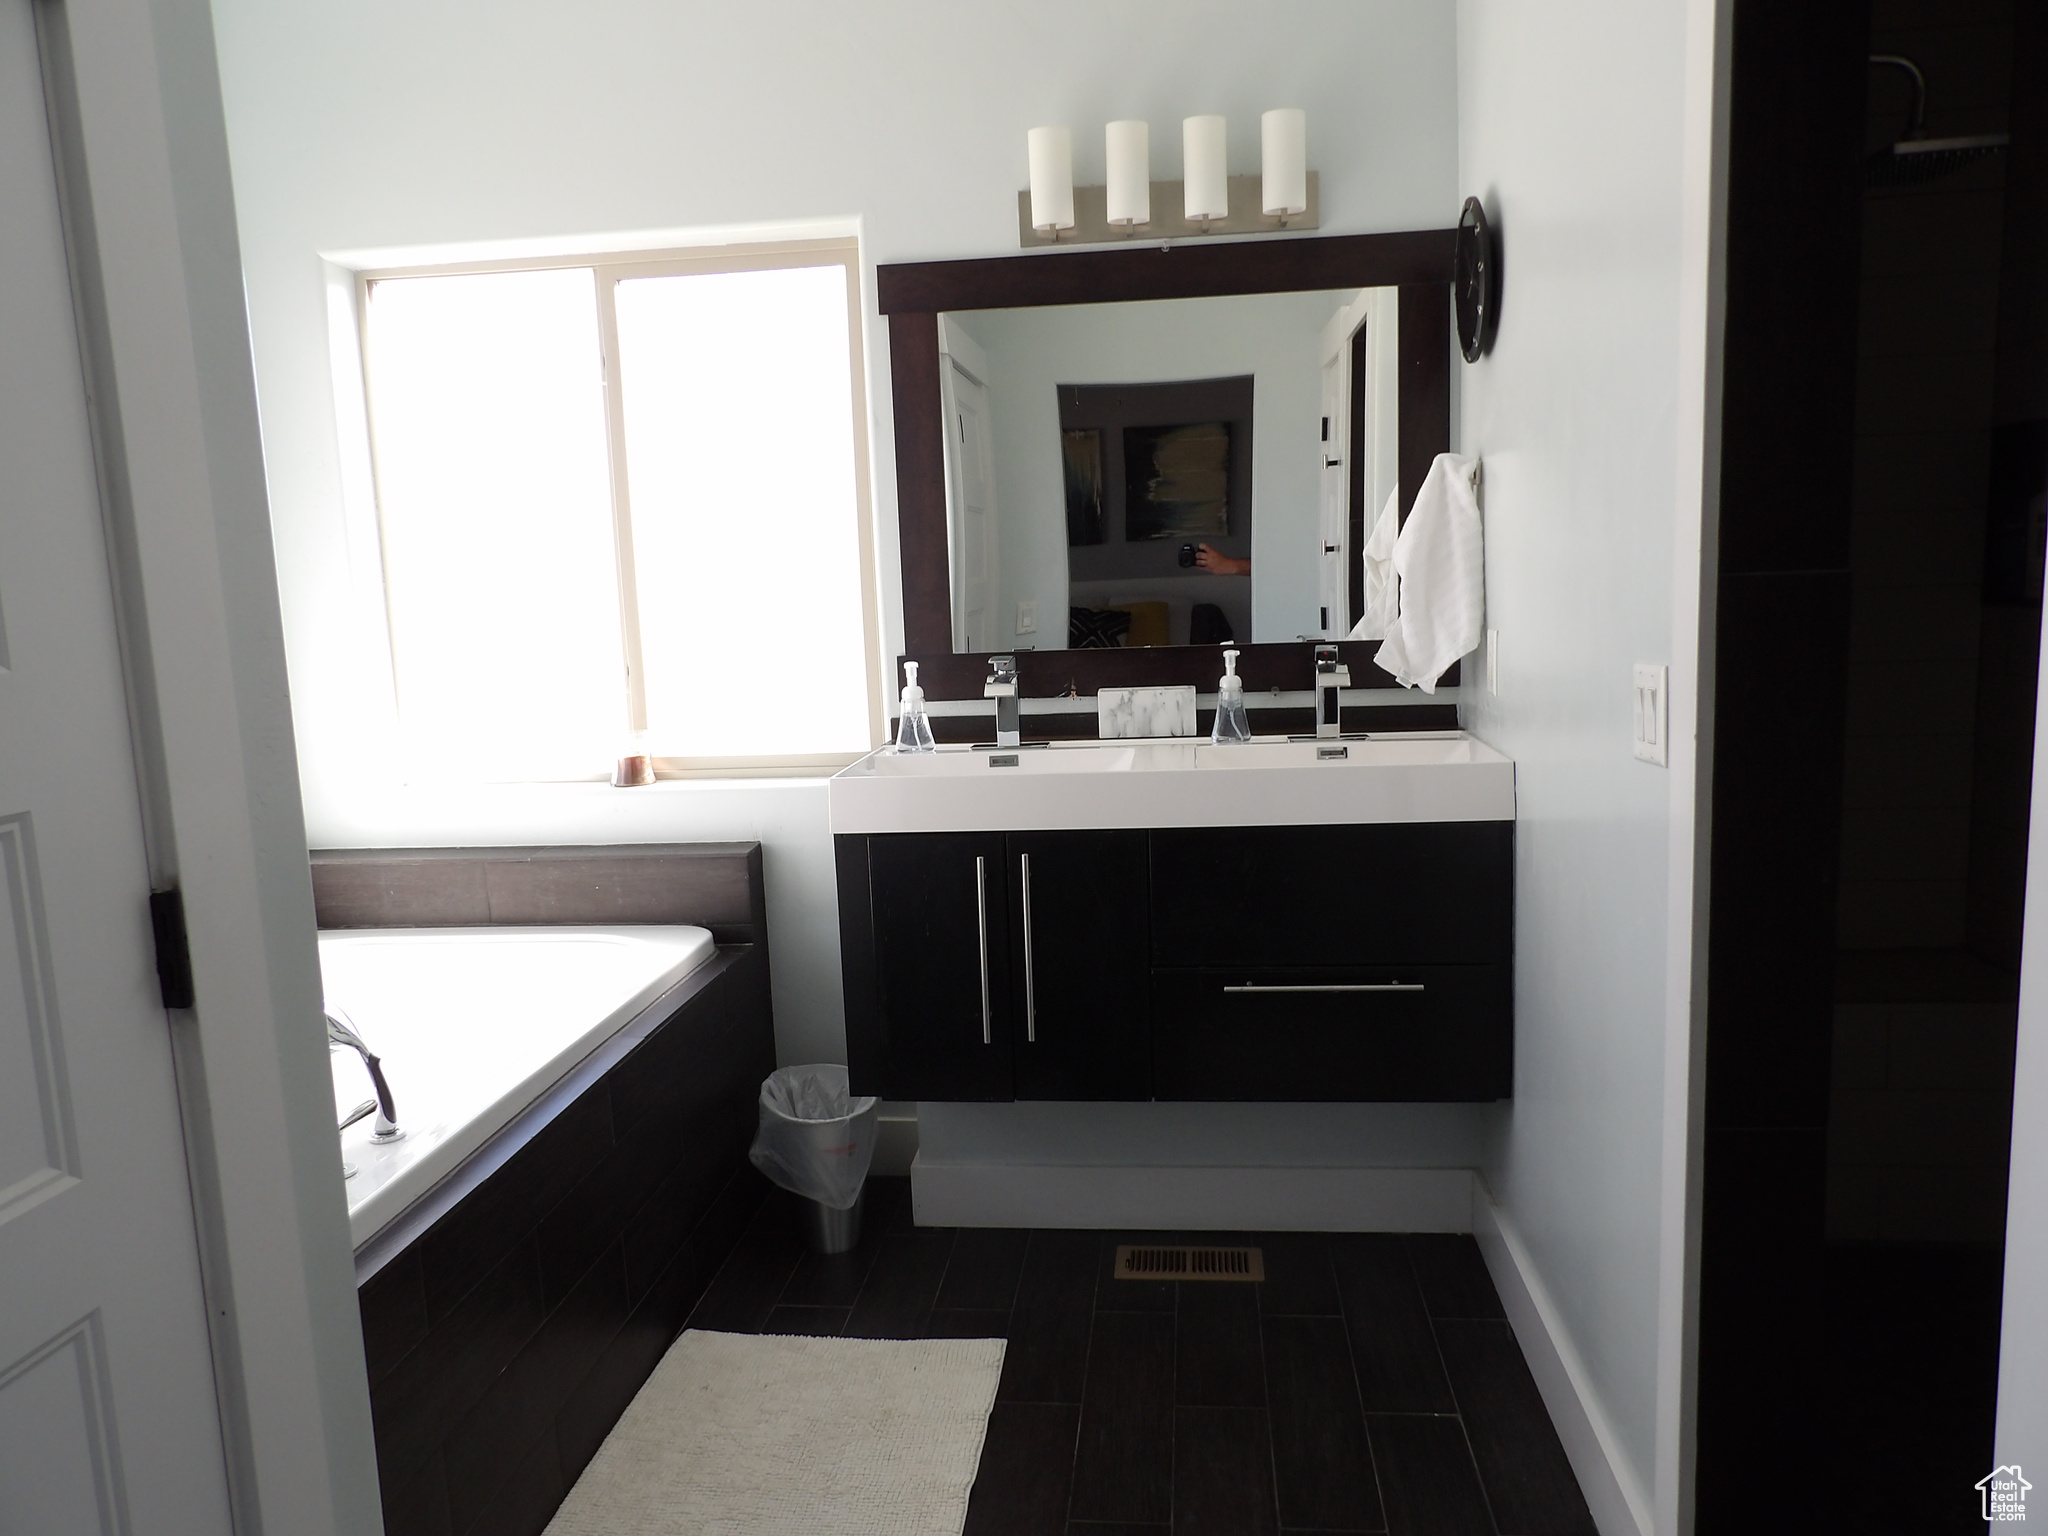 Bathroom with vanity, tile flooring, and tiled tub